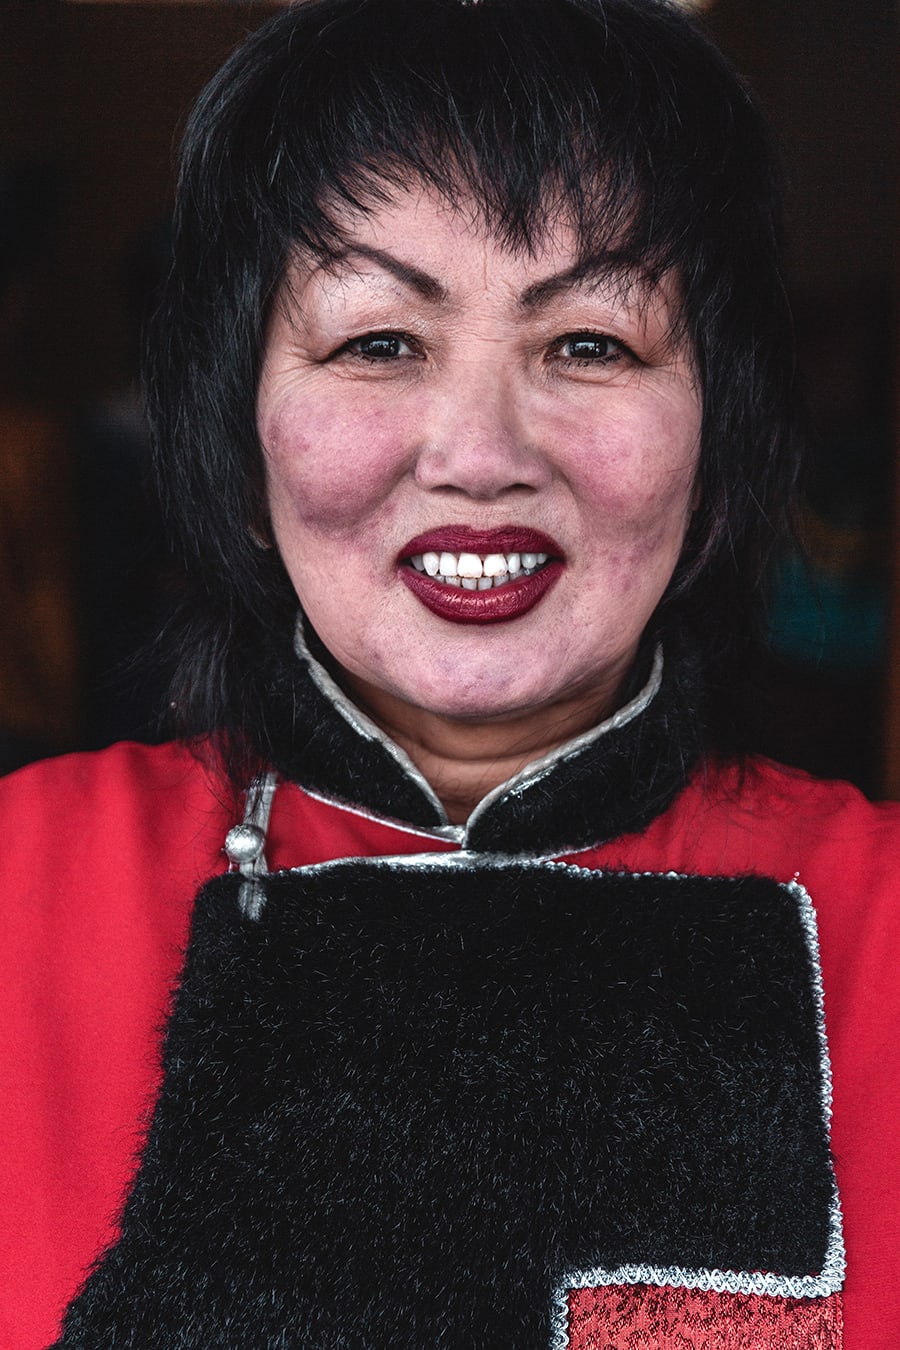 A Buryat woman wearing traditional clothing.